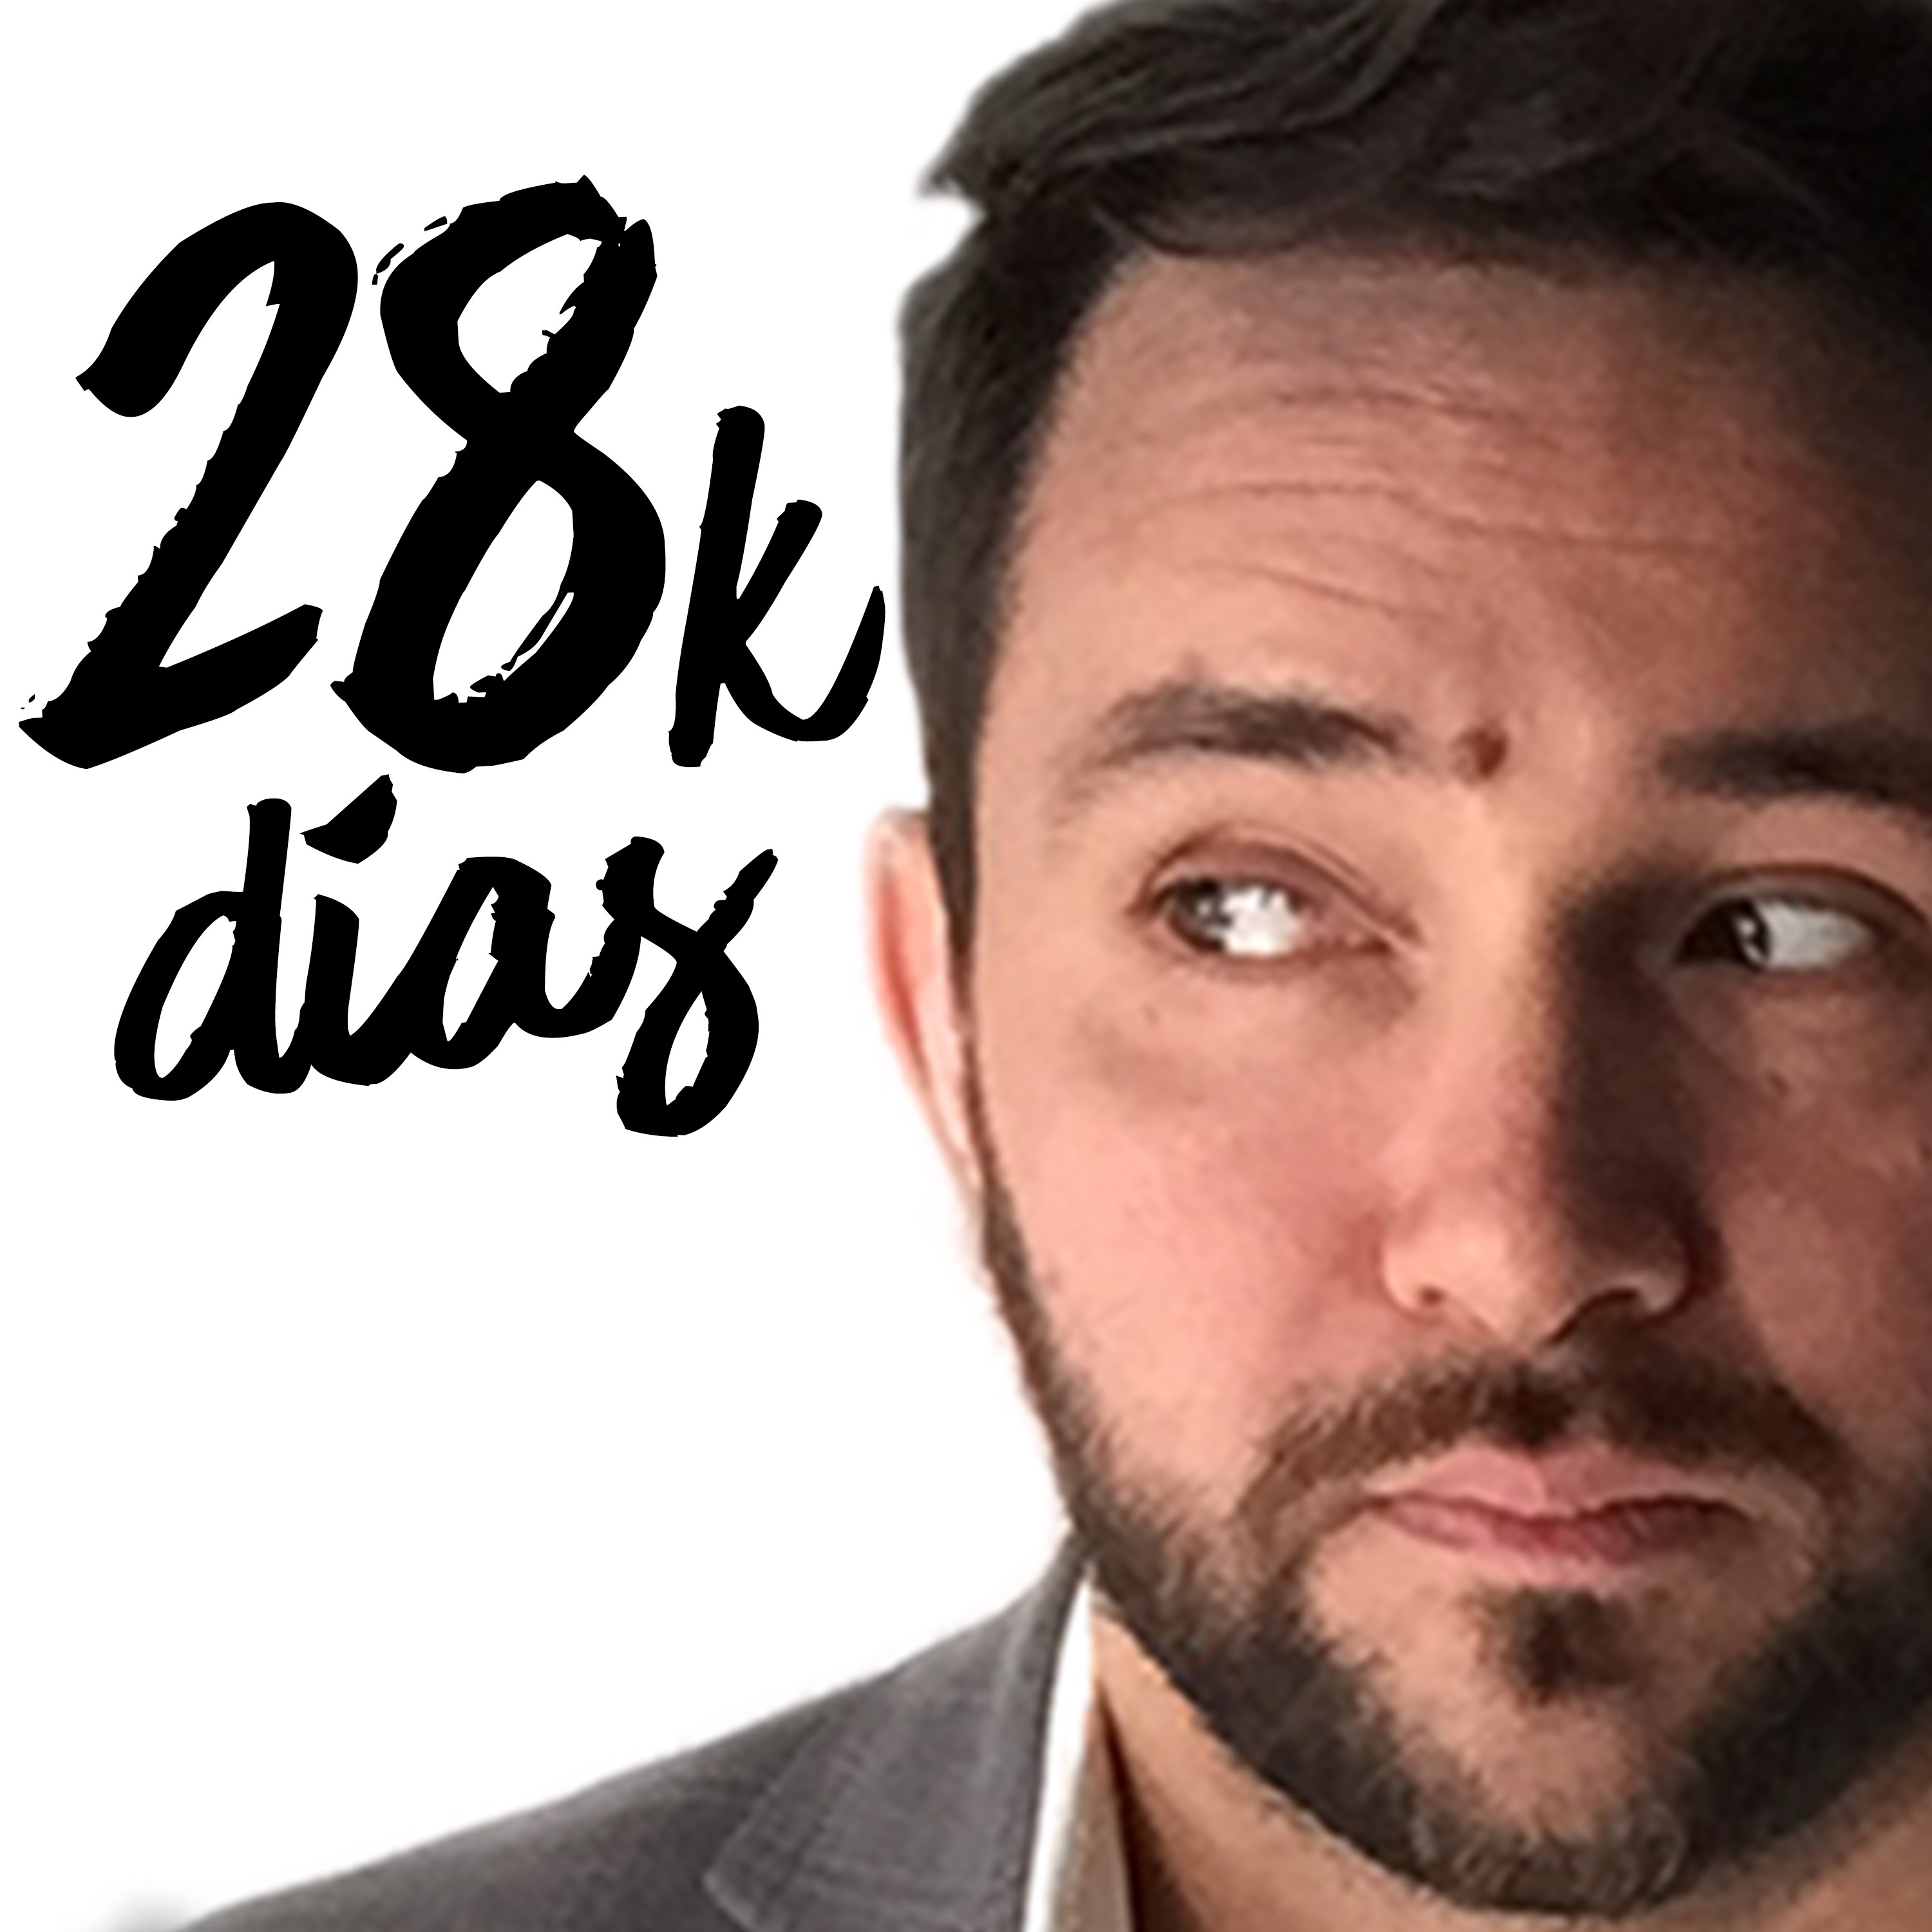 Artwork for podcast 28,000 días